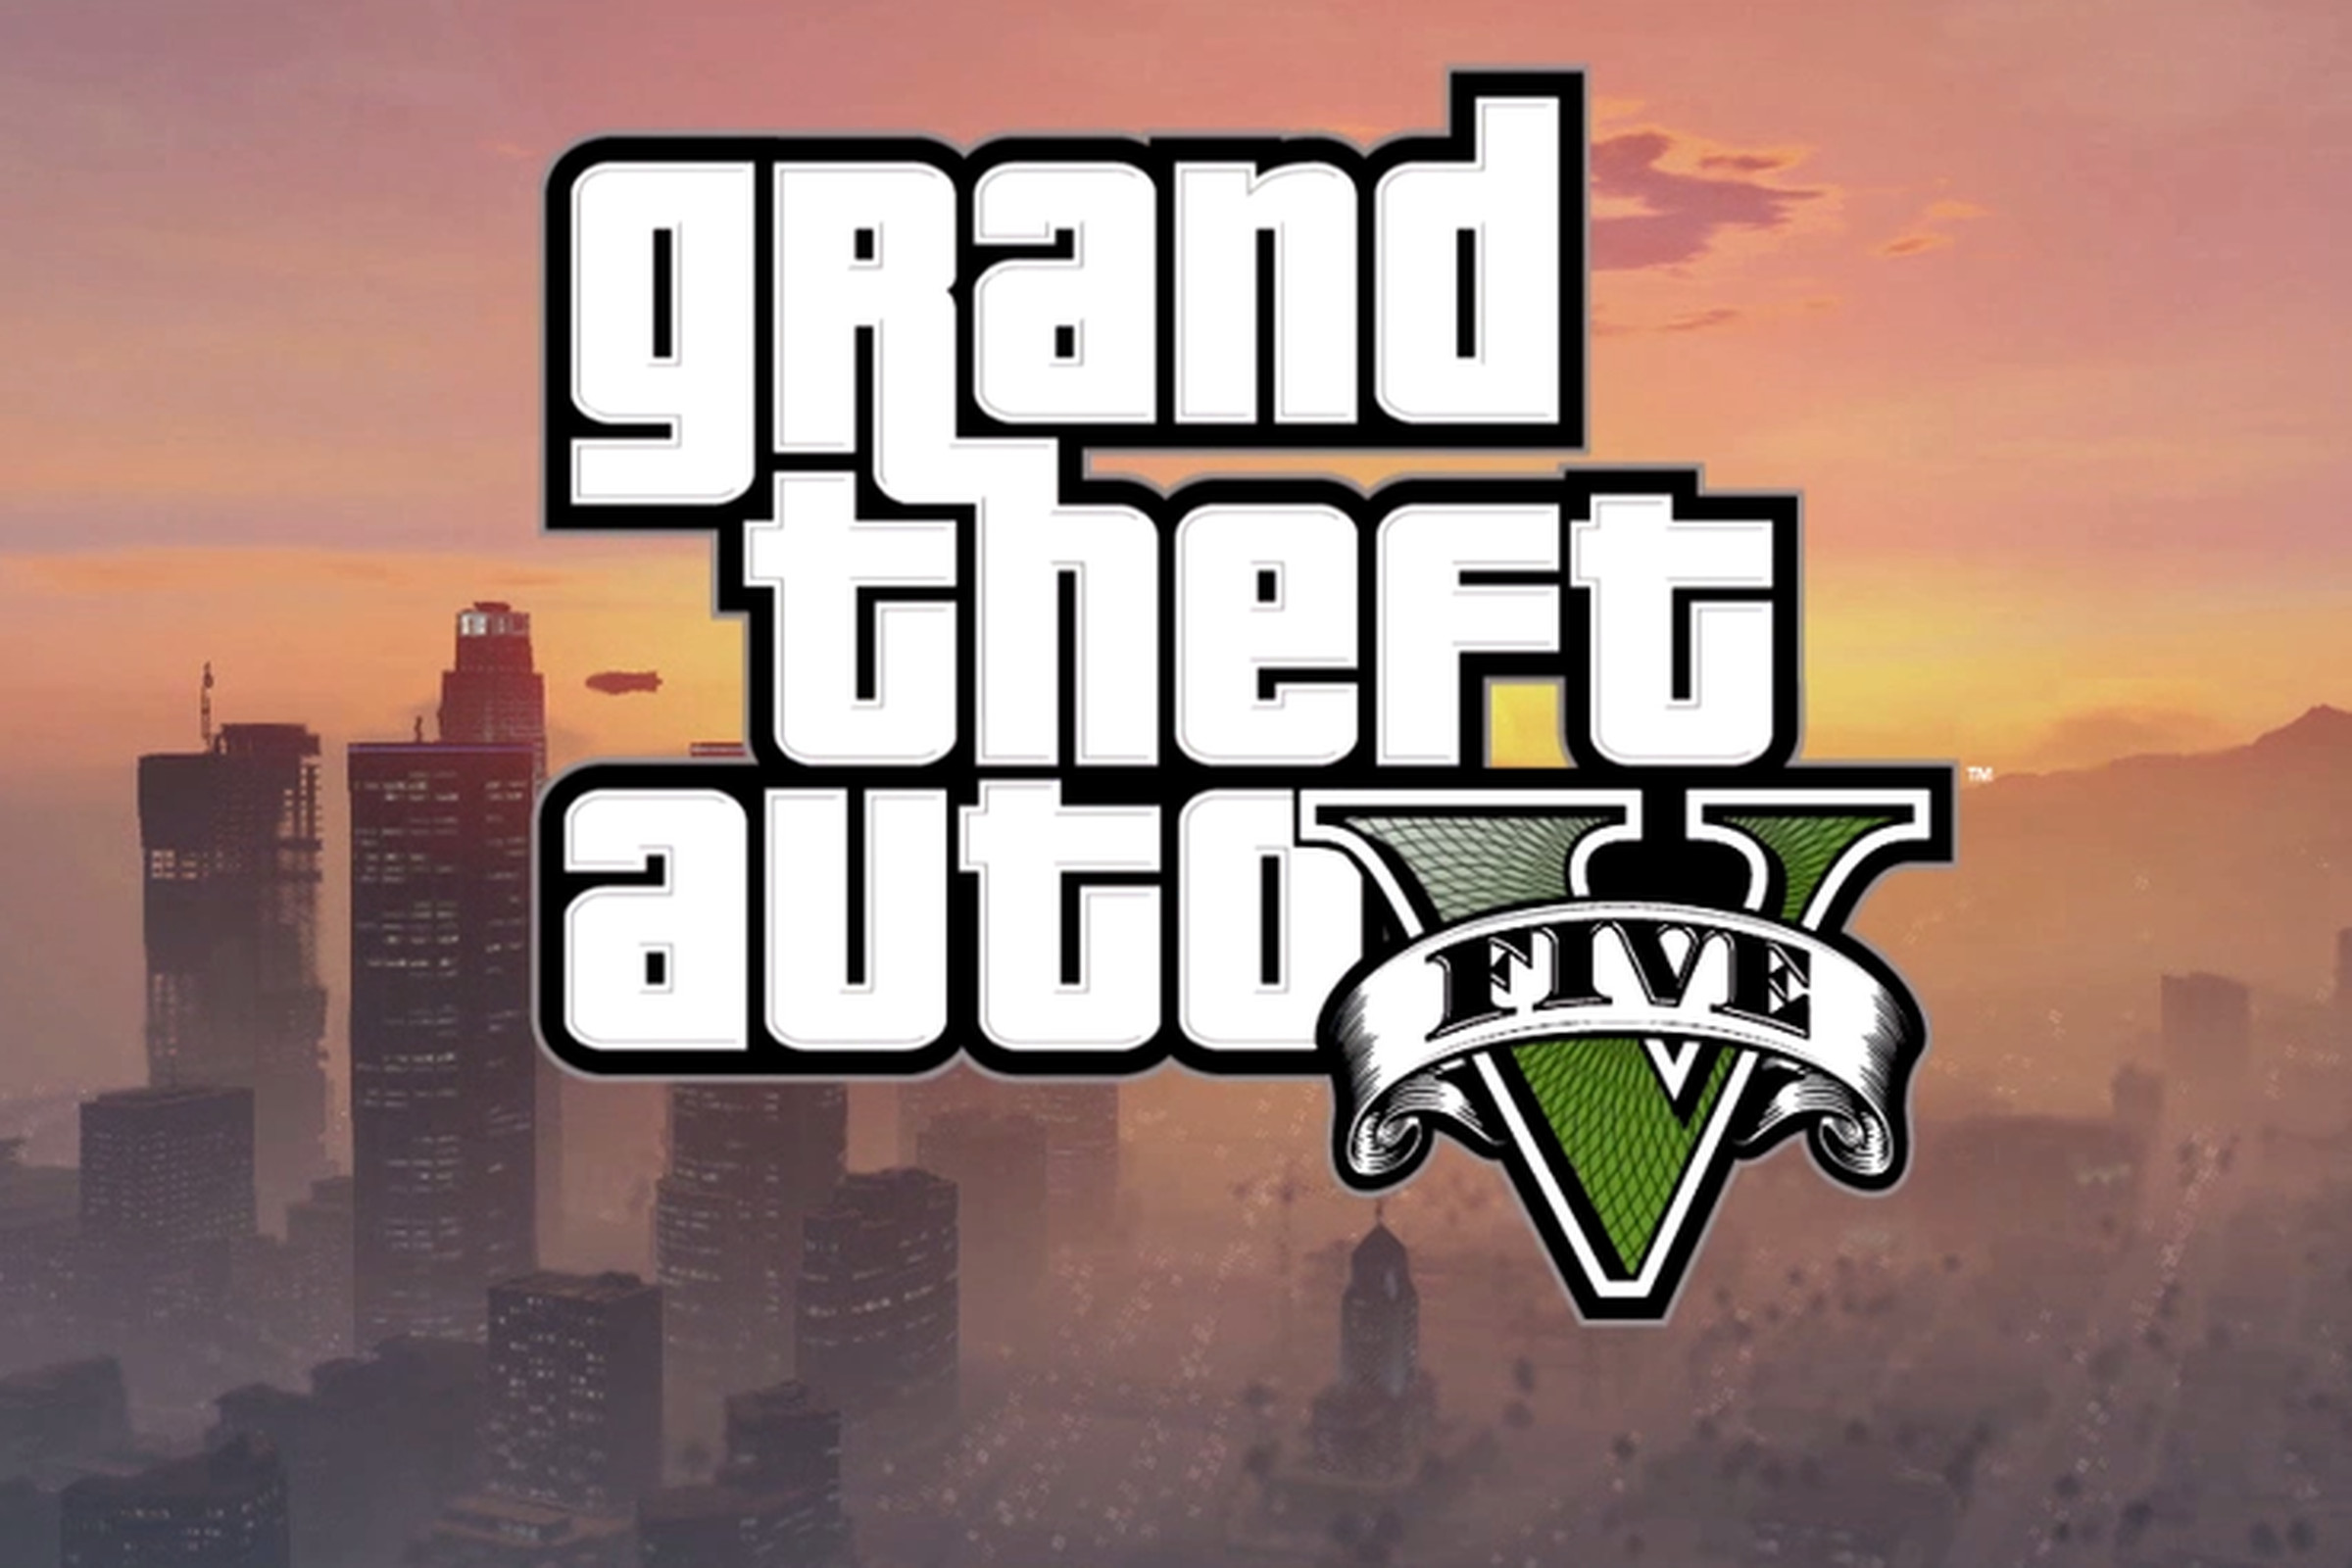 Grand Theft Auto V logo with background